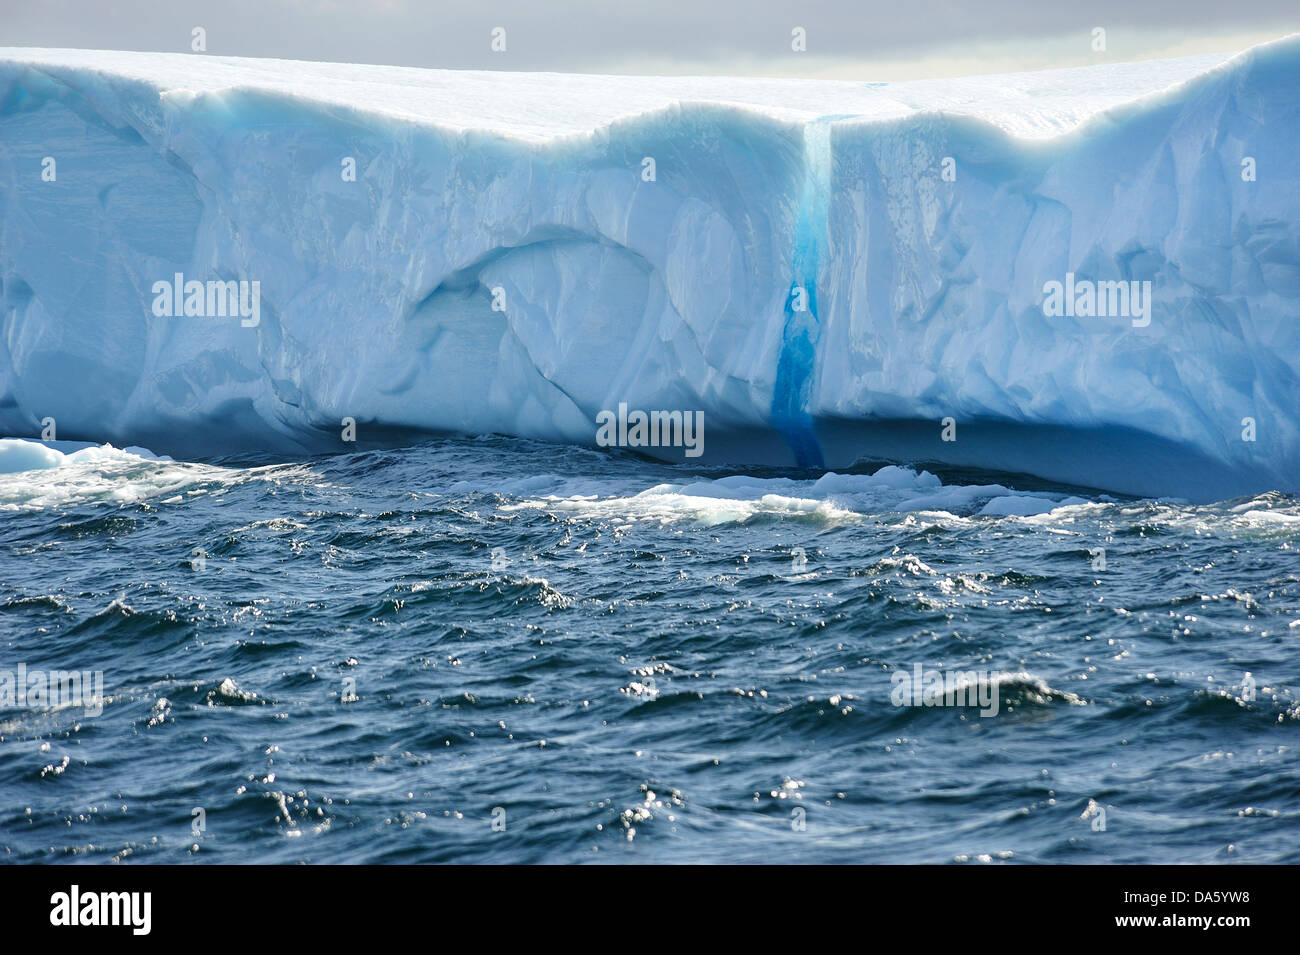 Los icebergs, Iceberg, flotante, cabeza de cuervo, Twillingate, Newfoundland, Canadá, hielo, naturaleza Foto de stock